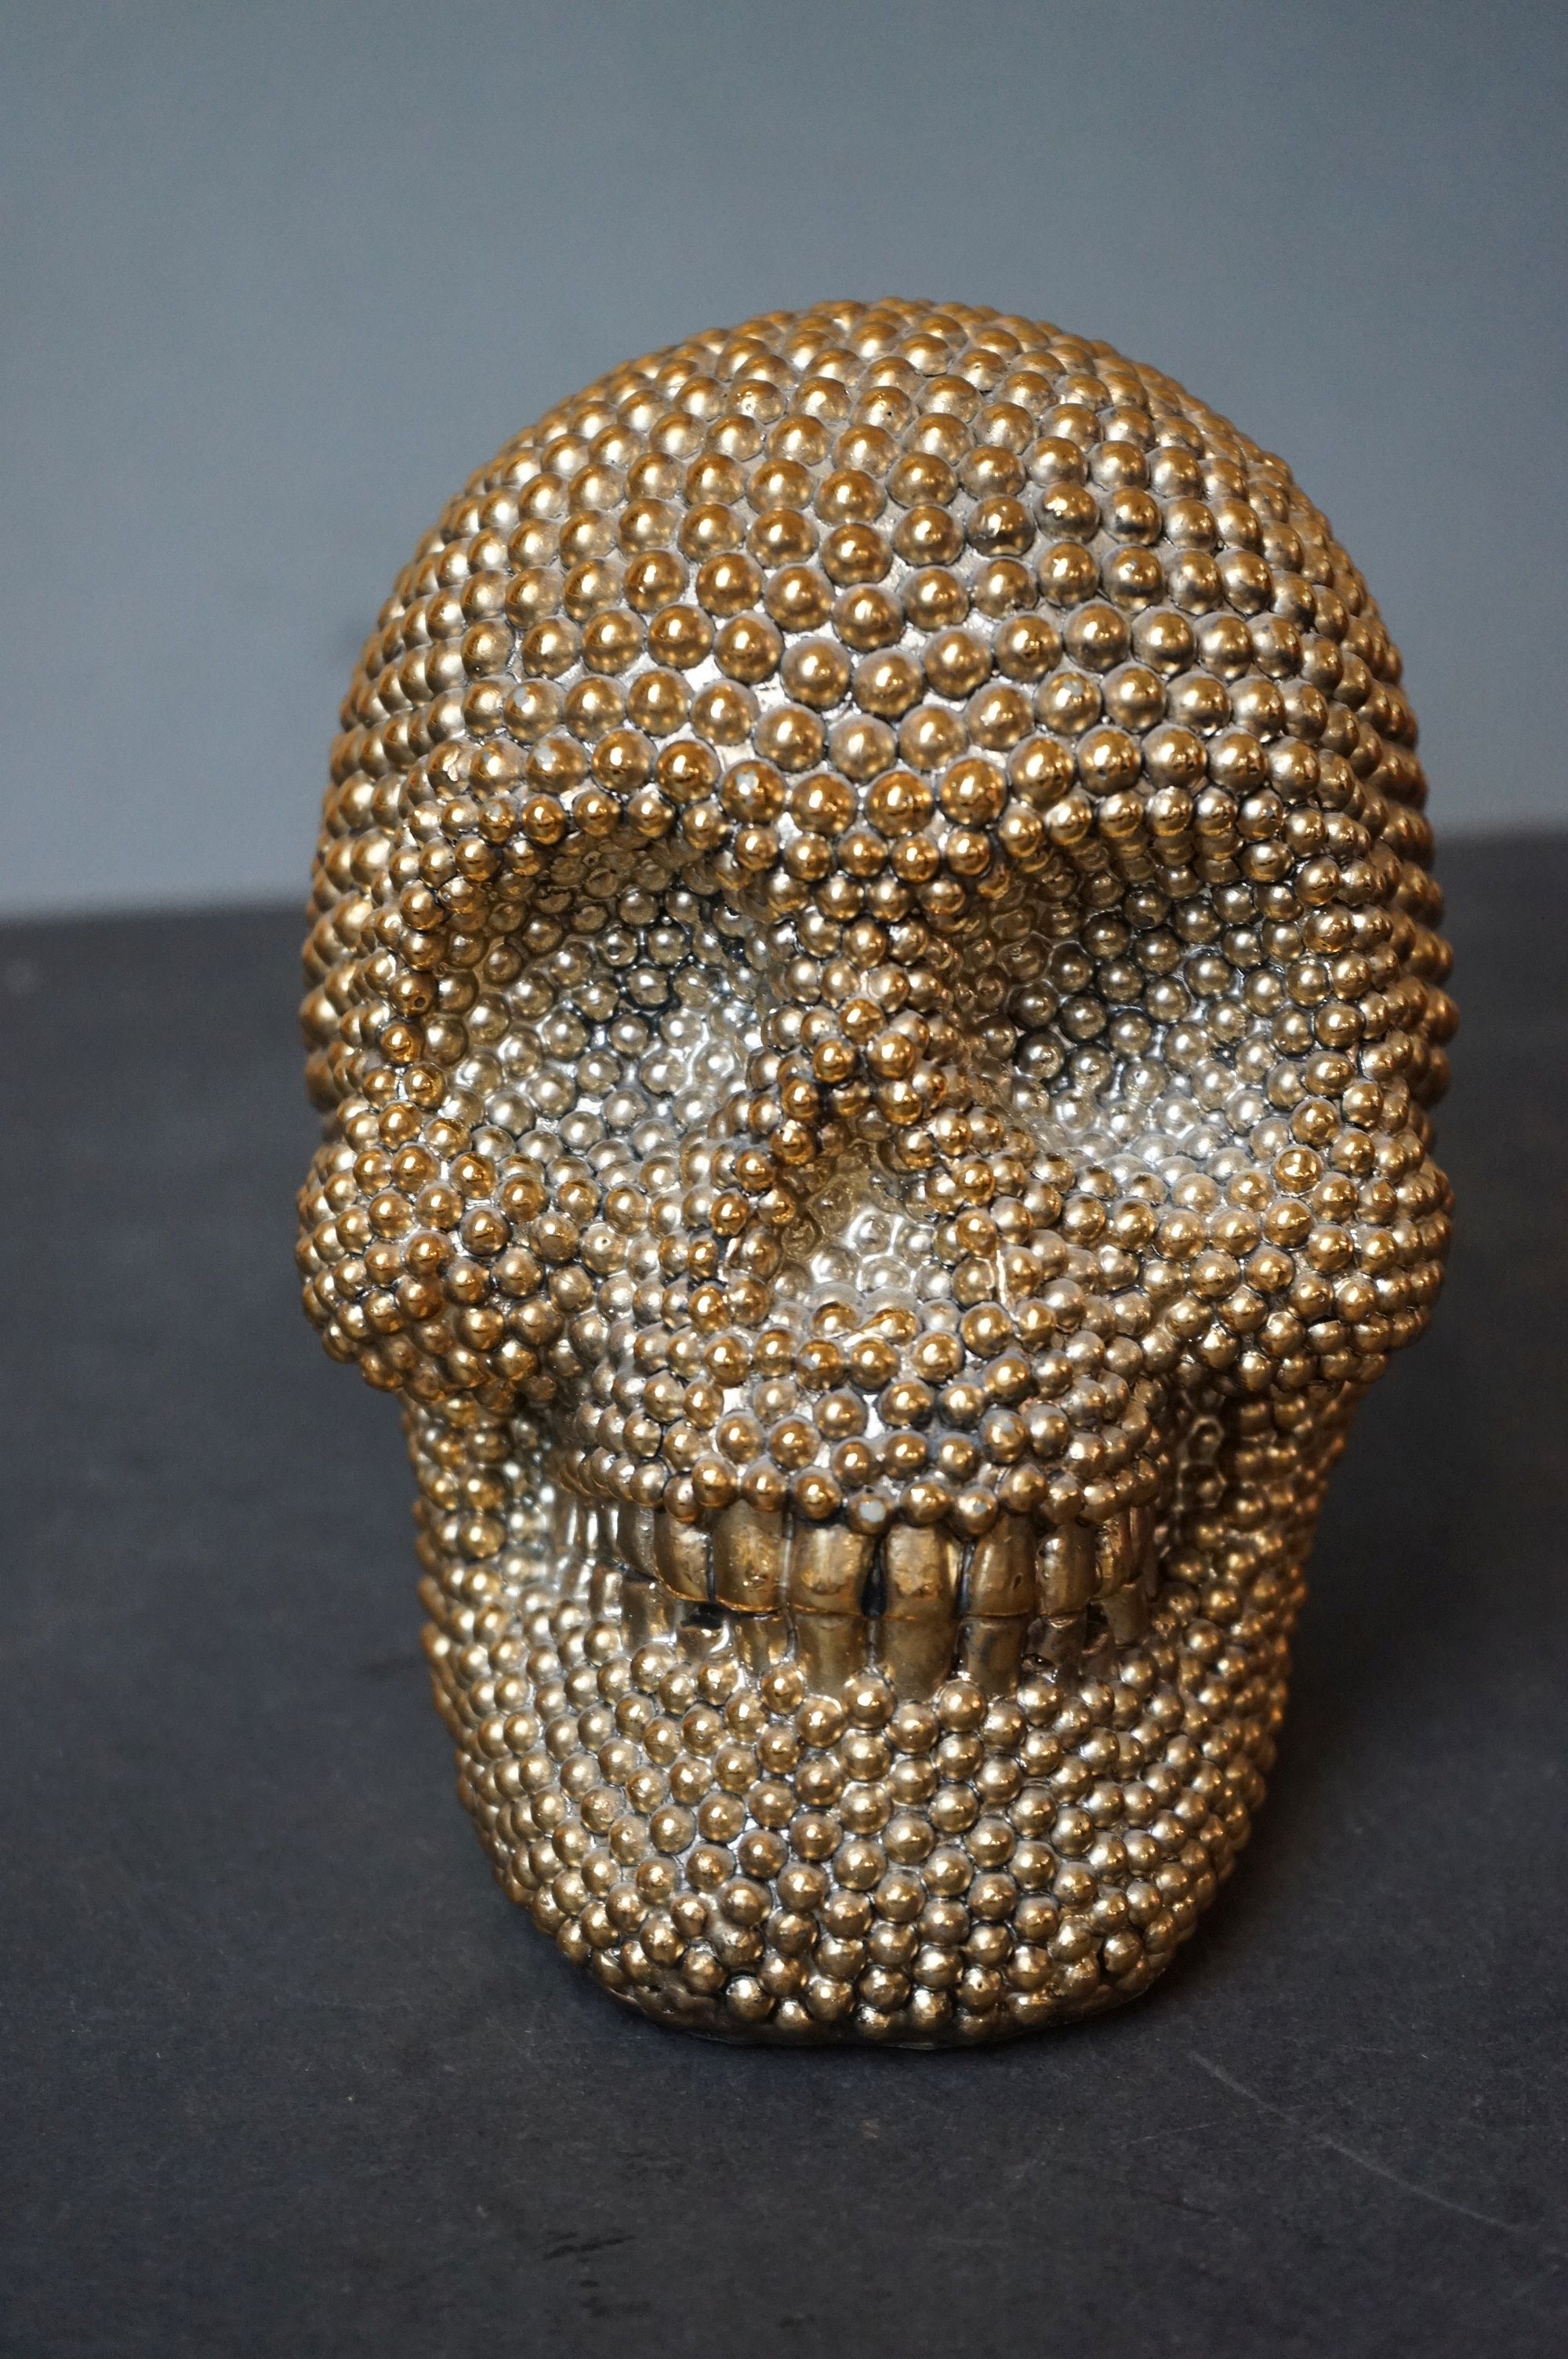 A decorative resin Golden skull ornament. - Image 4 of 4